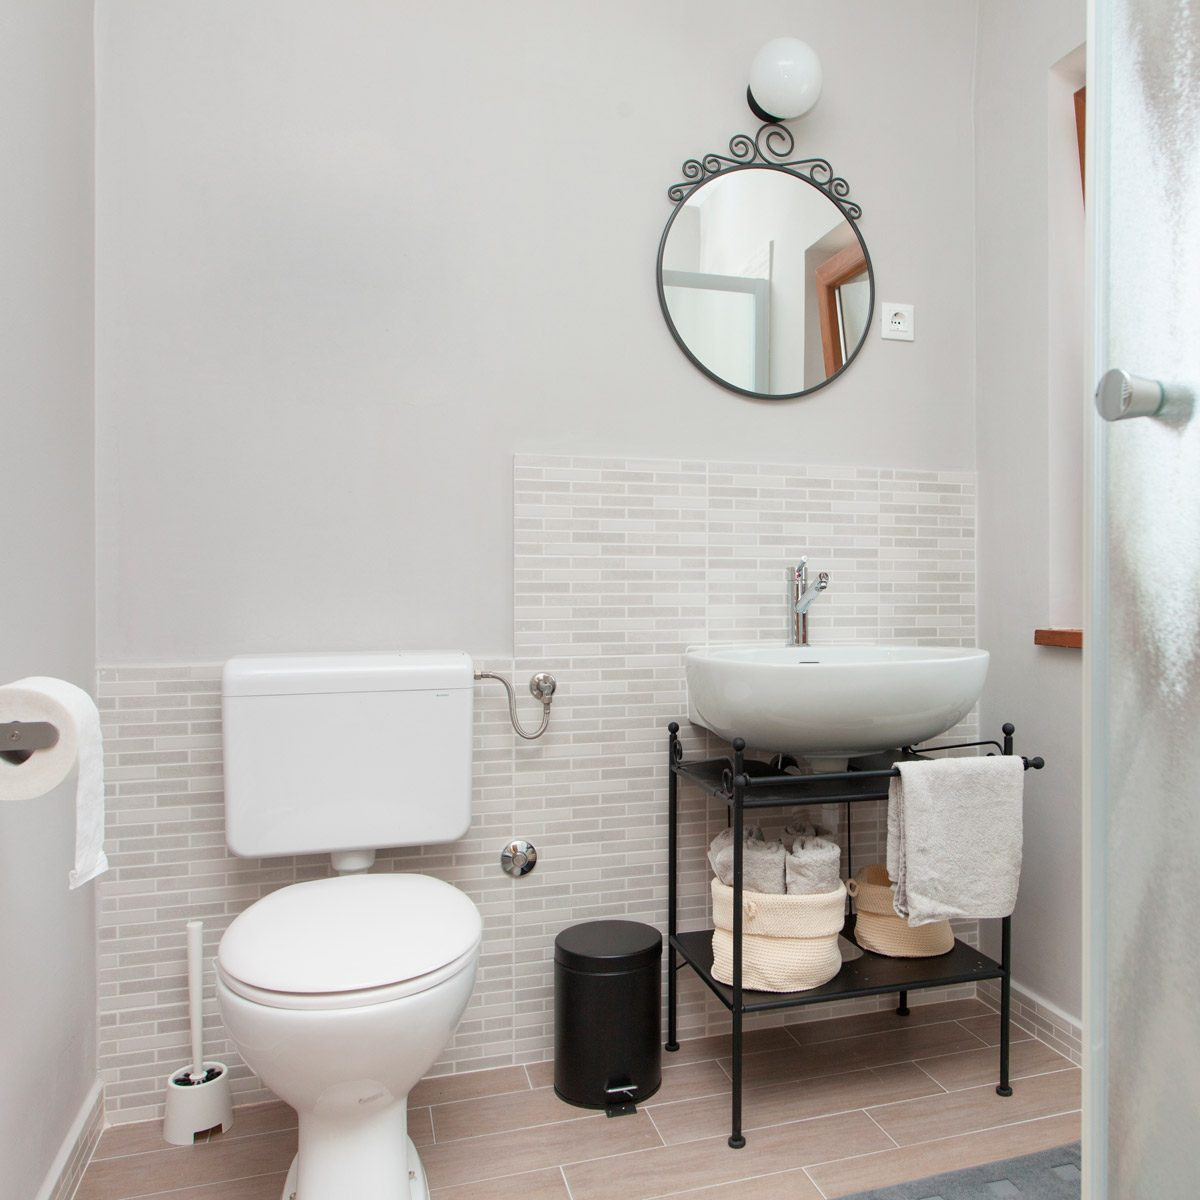 Shower Ideas For Small Bathroom
 10 Small Bathroom Ideas That Make a Big Impact